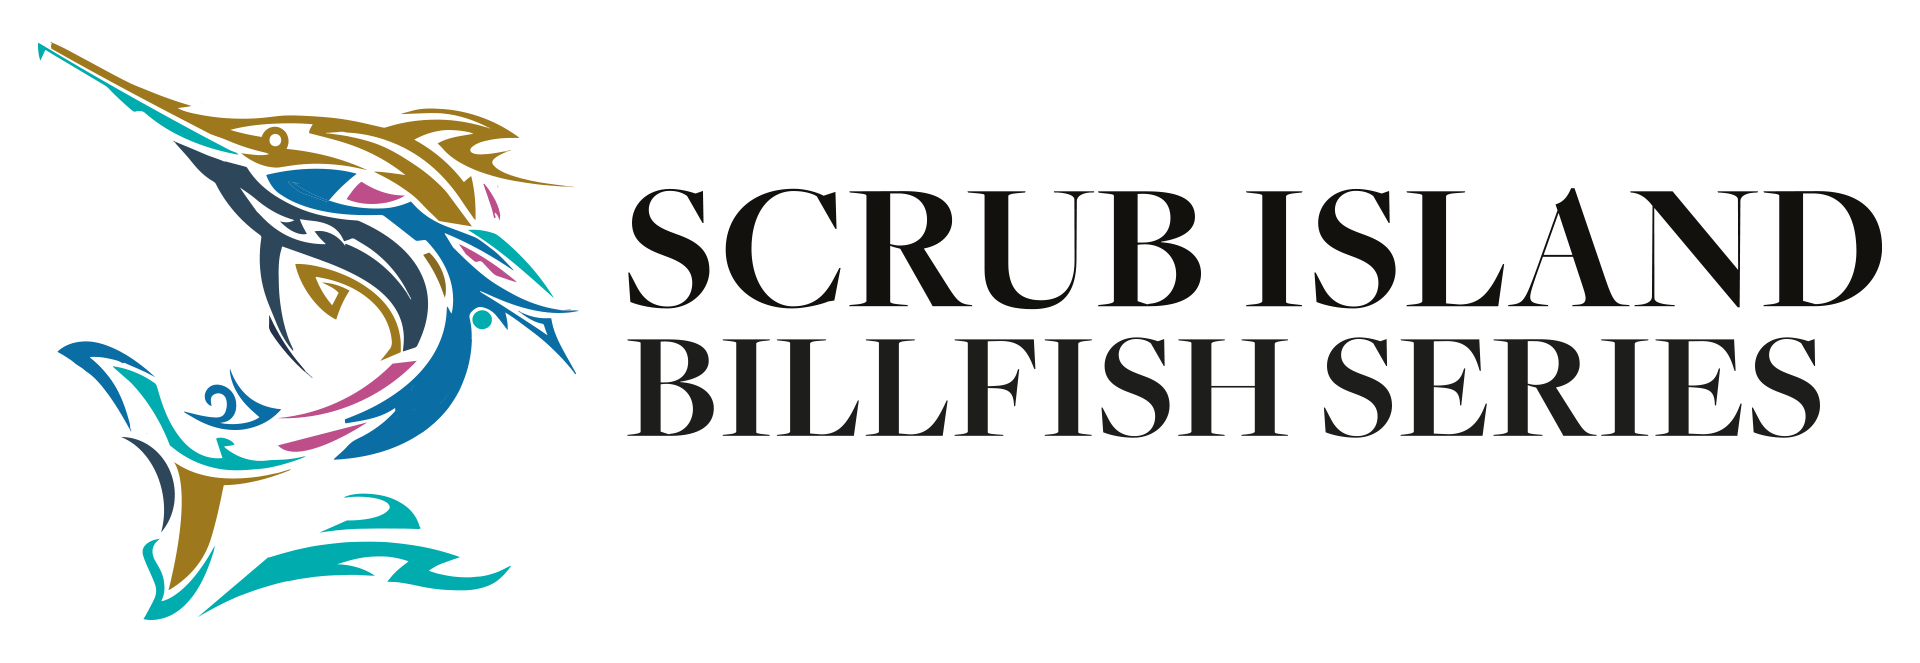 Scrub Island Billfish Series logo